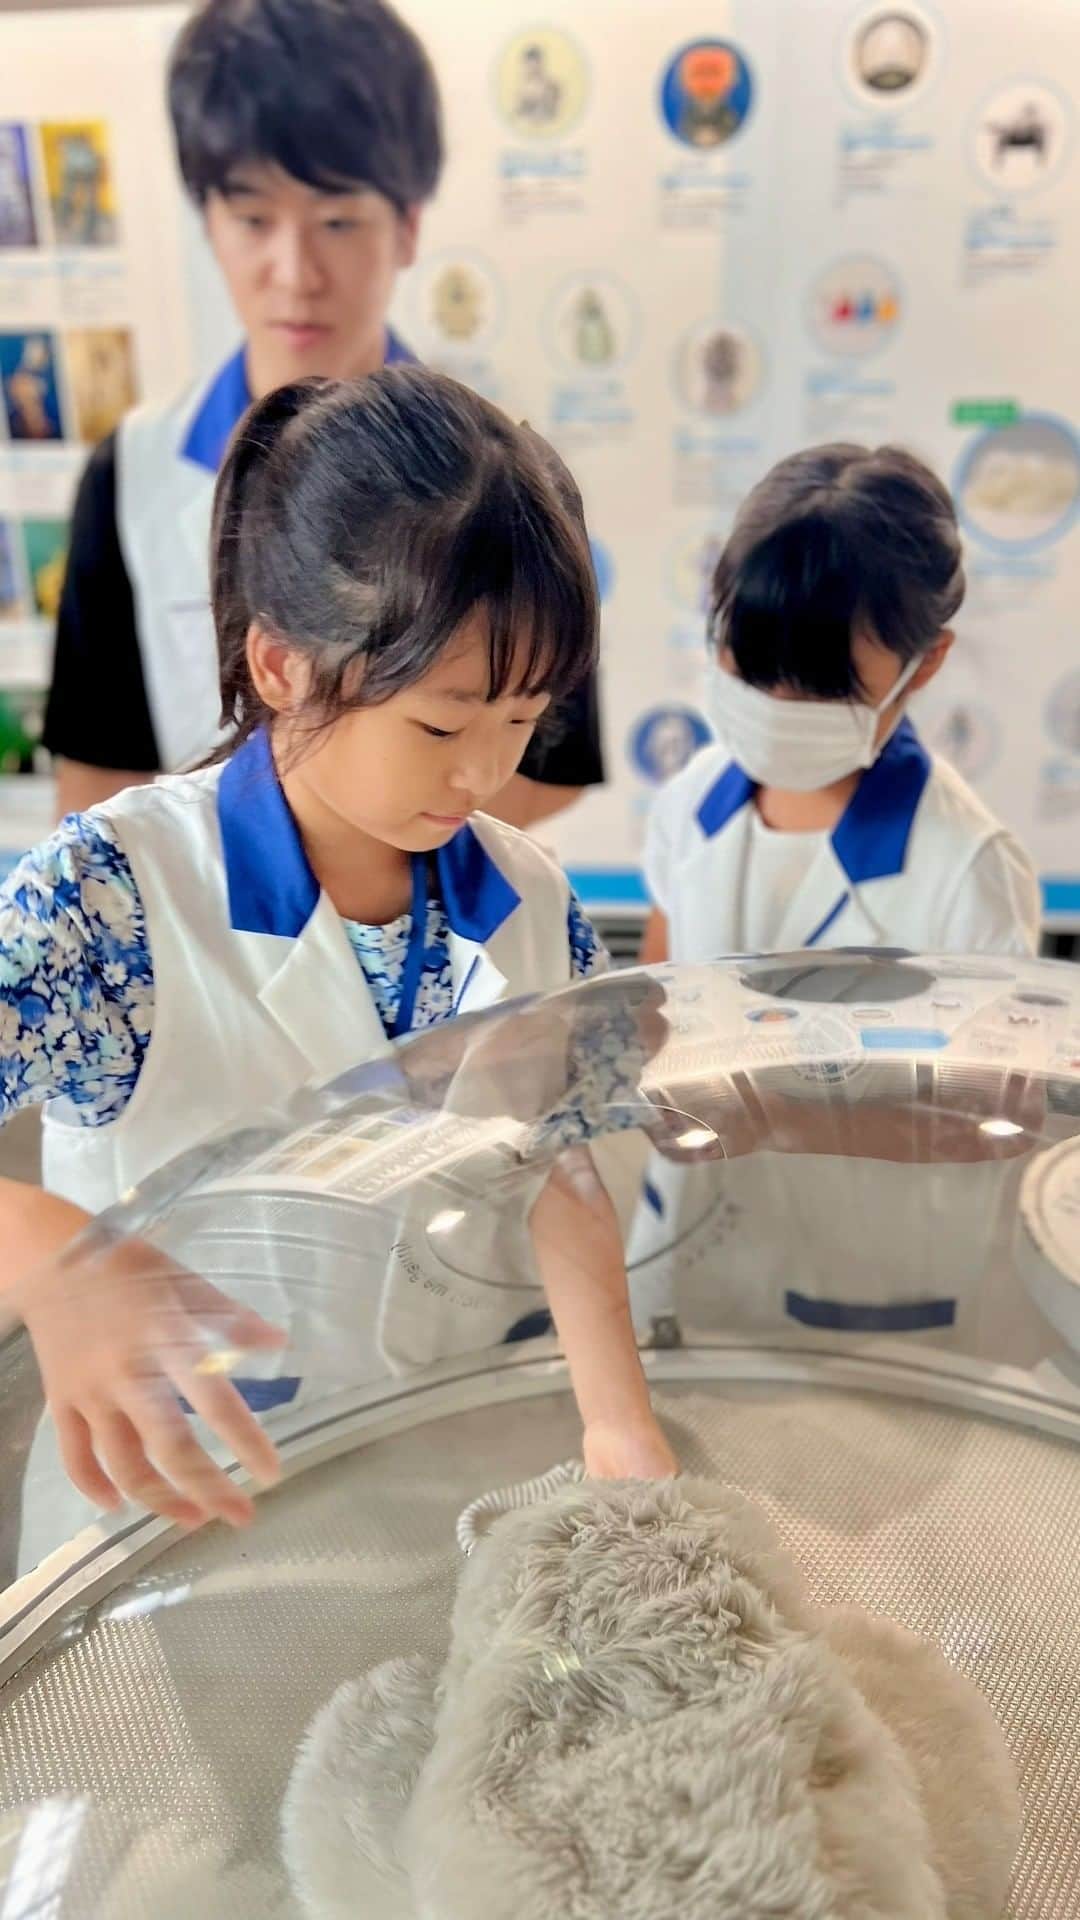 Miraikan, 日本科学未来館のインスタグラム